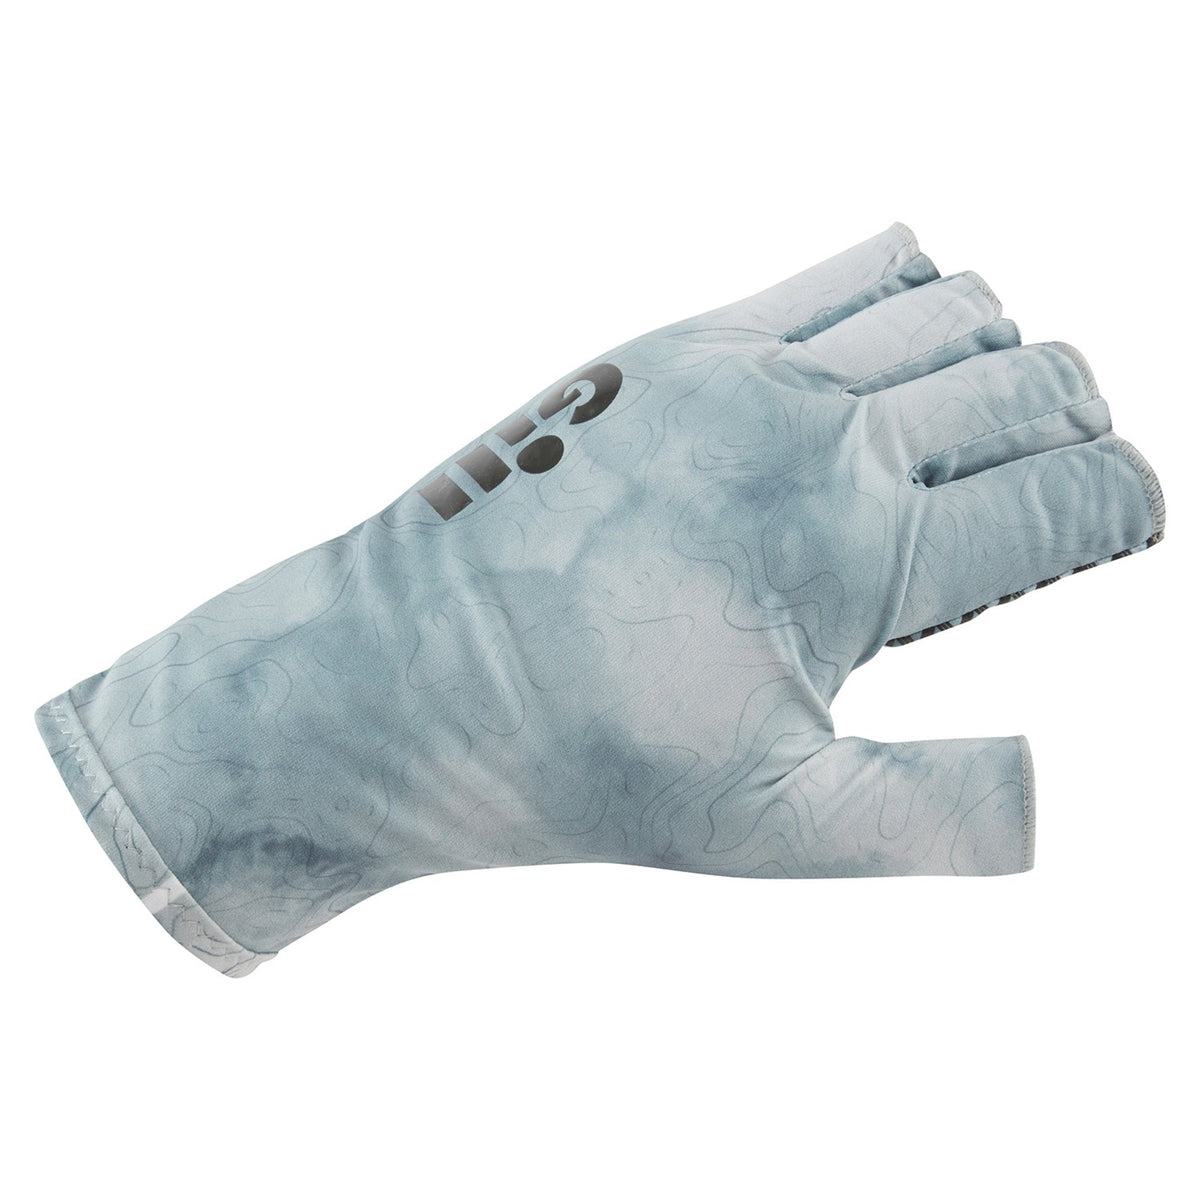 GILL XPEL Tec Gloves